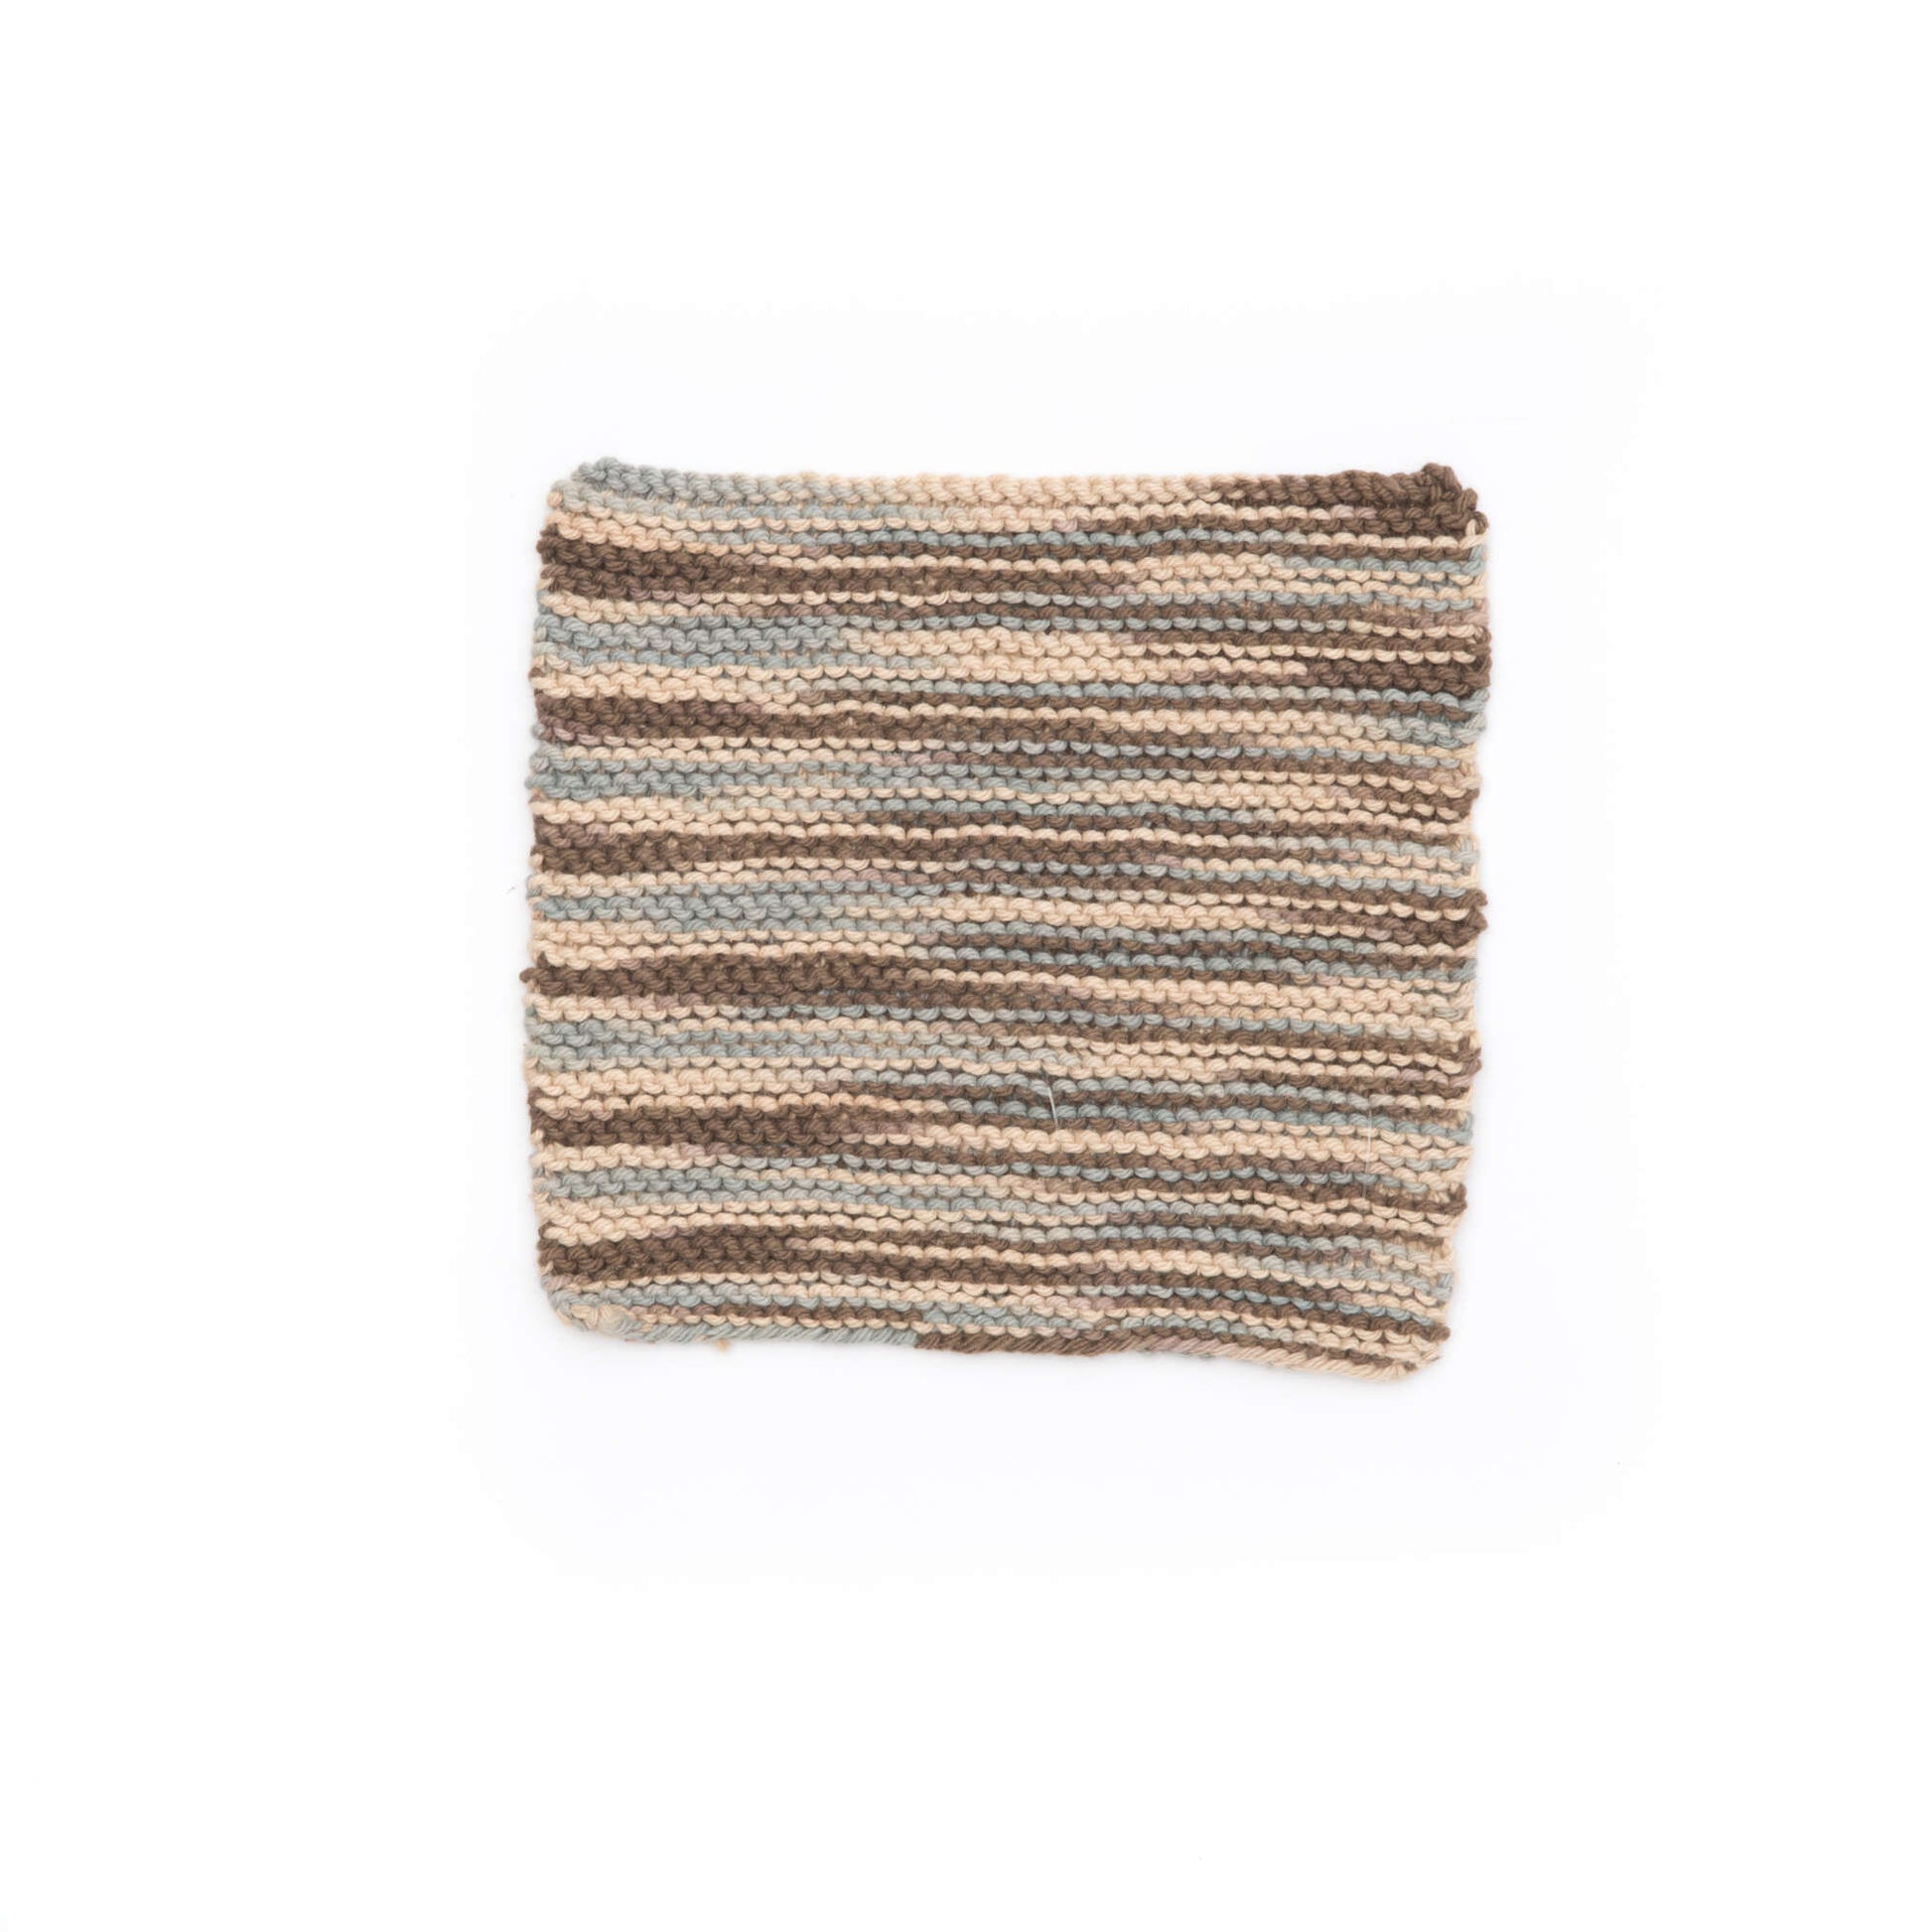 Free Lily Sugar'n Cream Back to Basics Dishcloth Knit Pattern